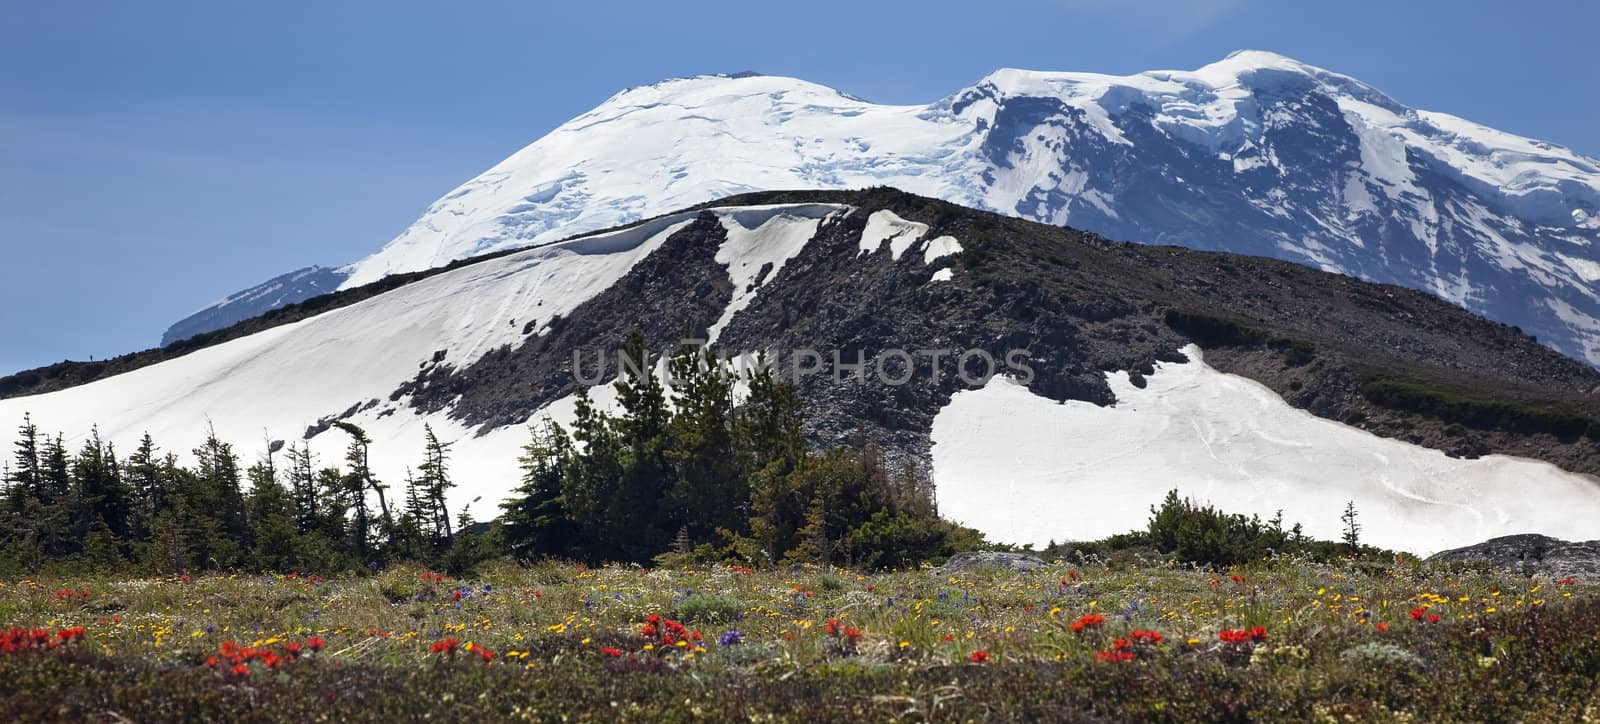 Mount Rainier Sunrise Wildflowers Snow Mountain, Indian paintbrush, lupine, heather Washington